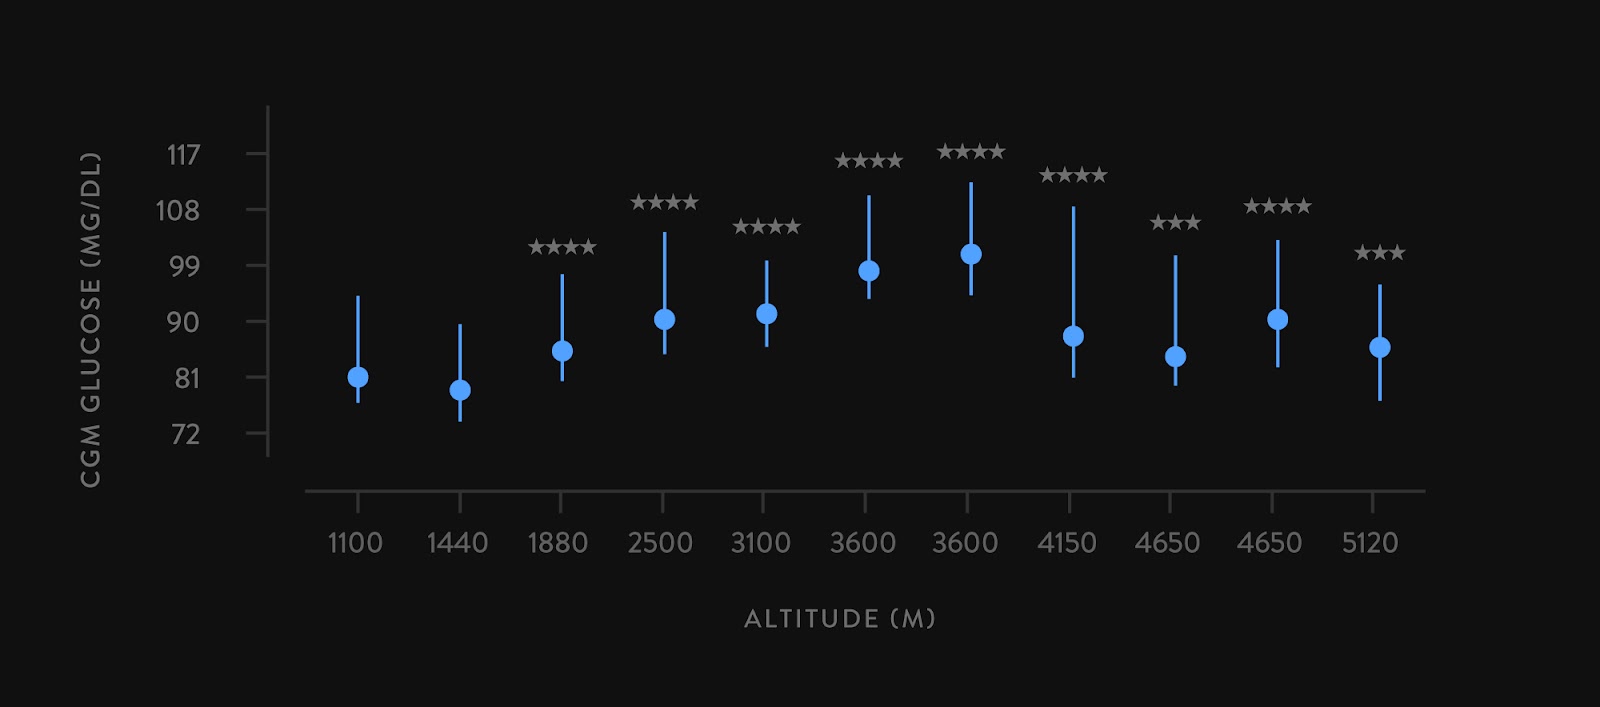 Glucose data and altitude